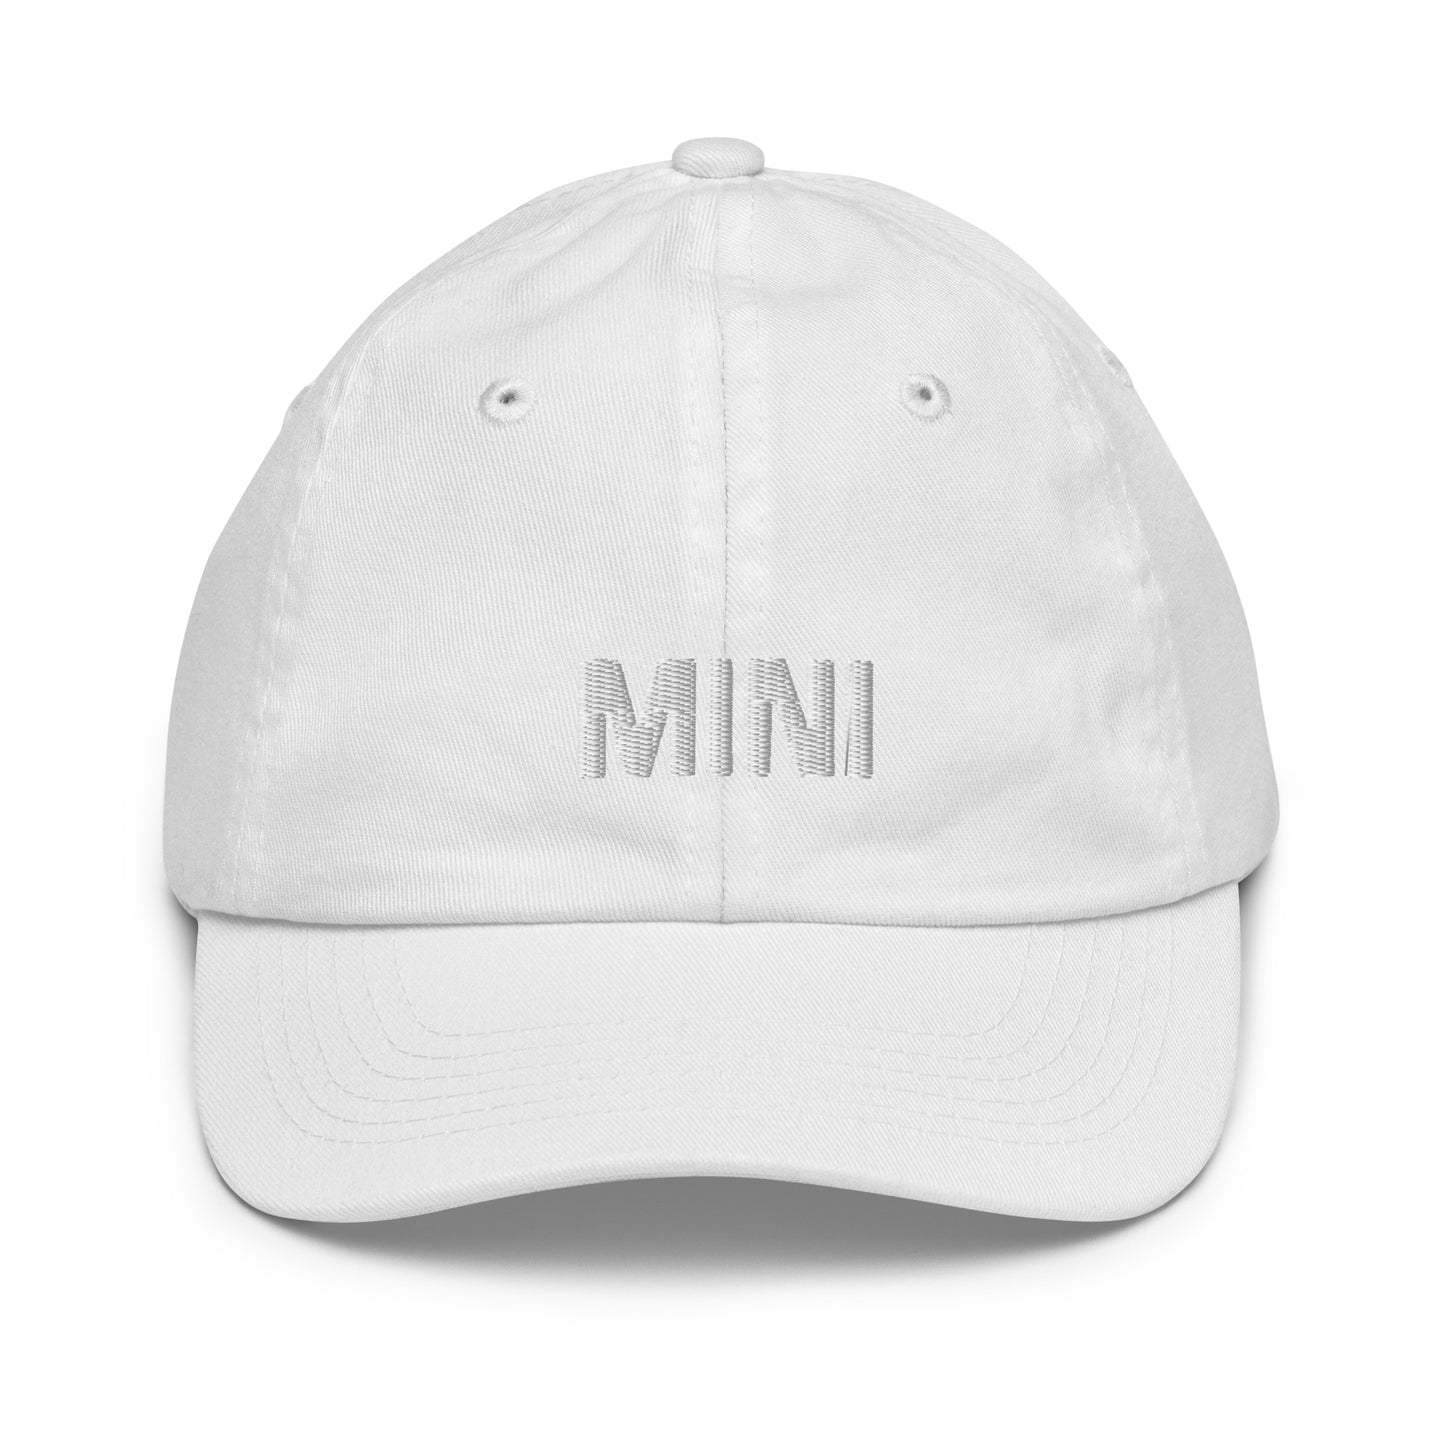 "MINI" YOUTH HAT